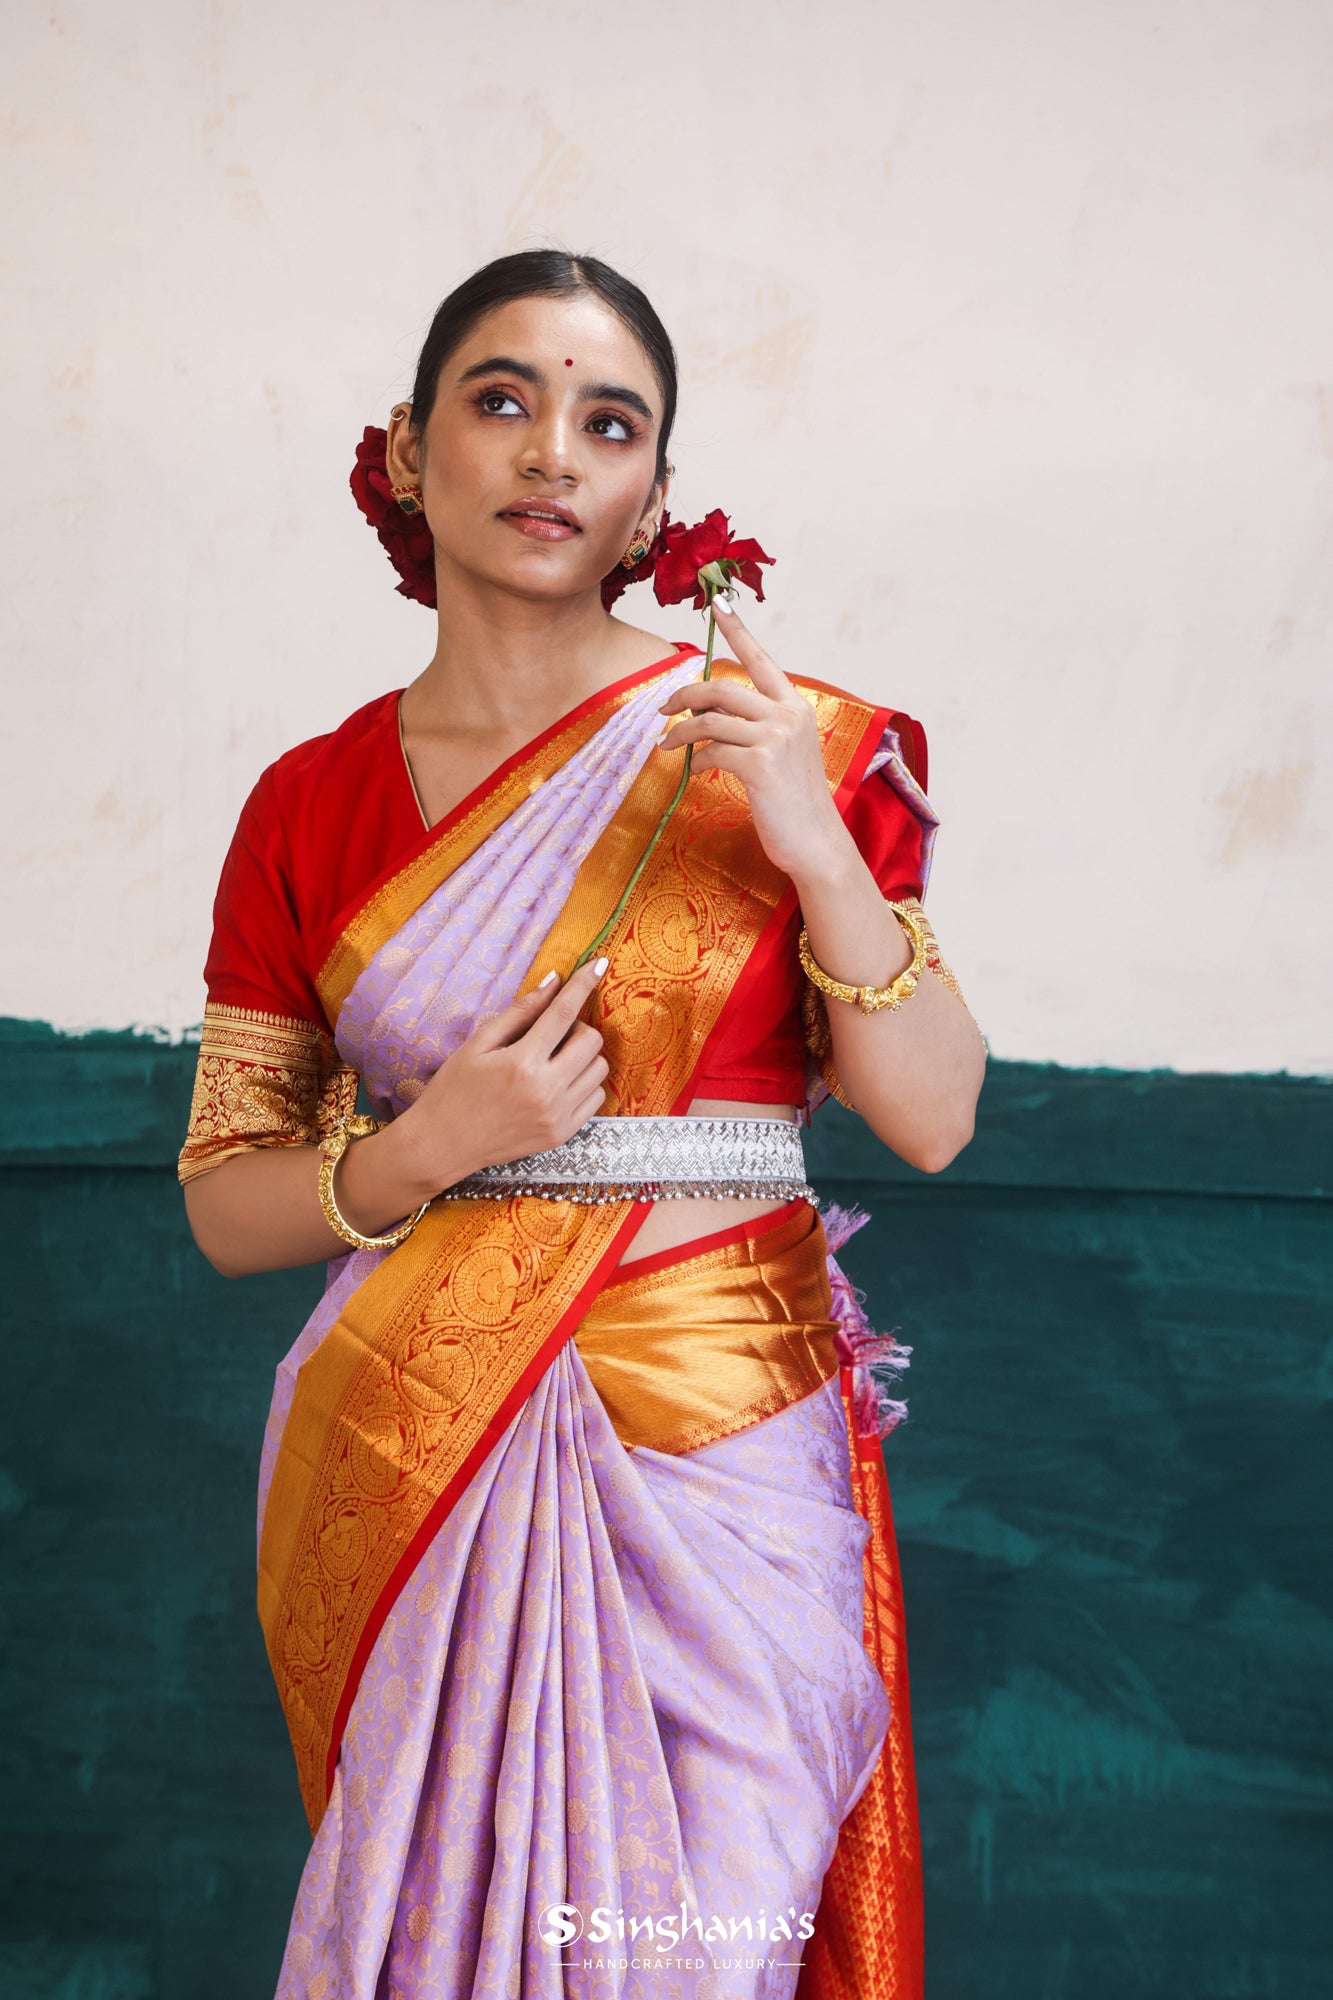 Lavender Indigo Kanjivaram Silk Saree With Floral Jaal Pattern